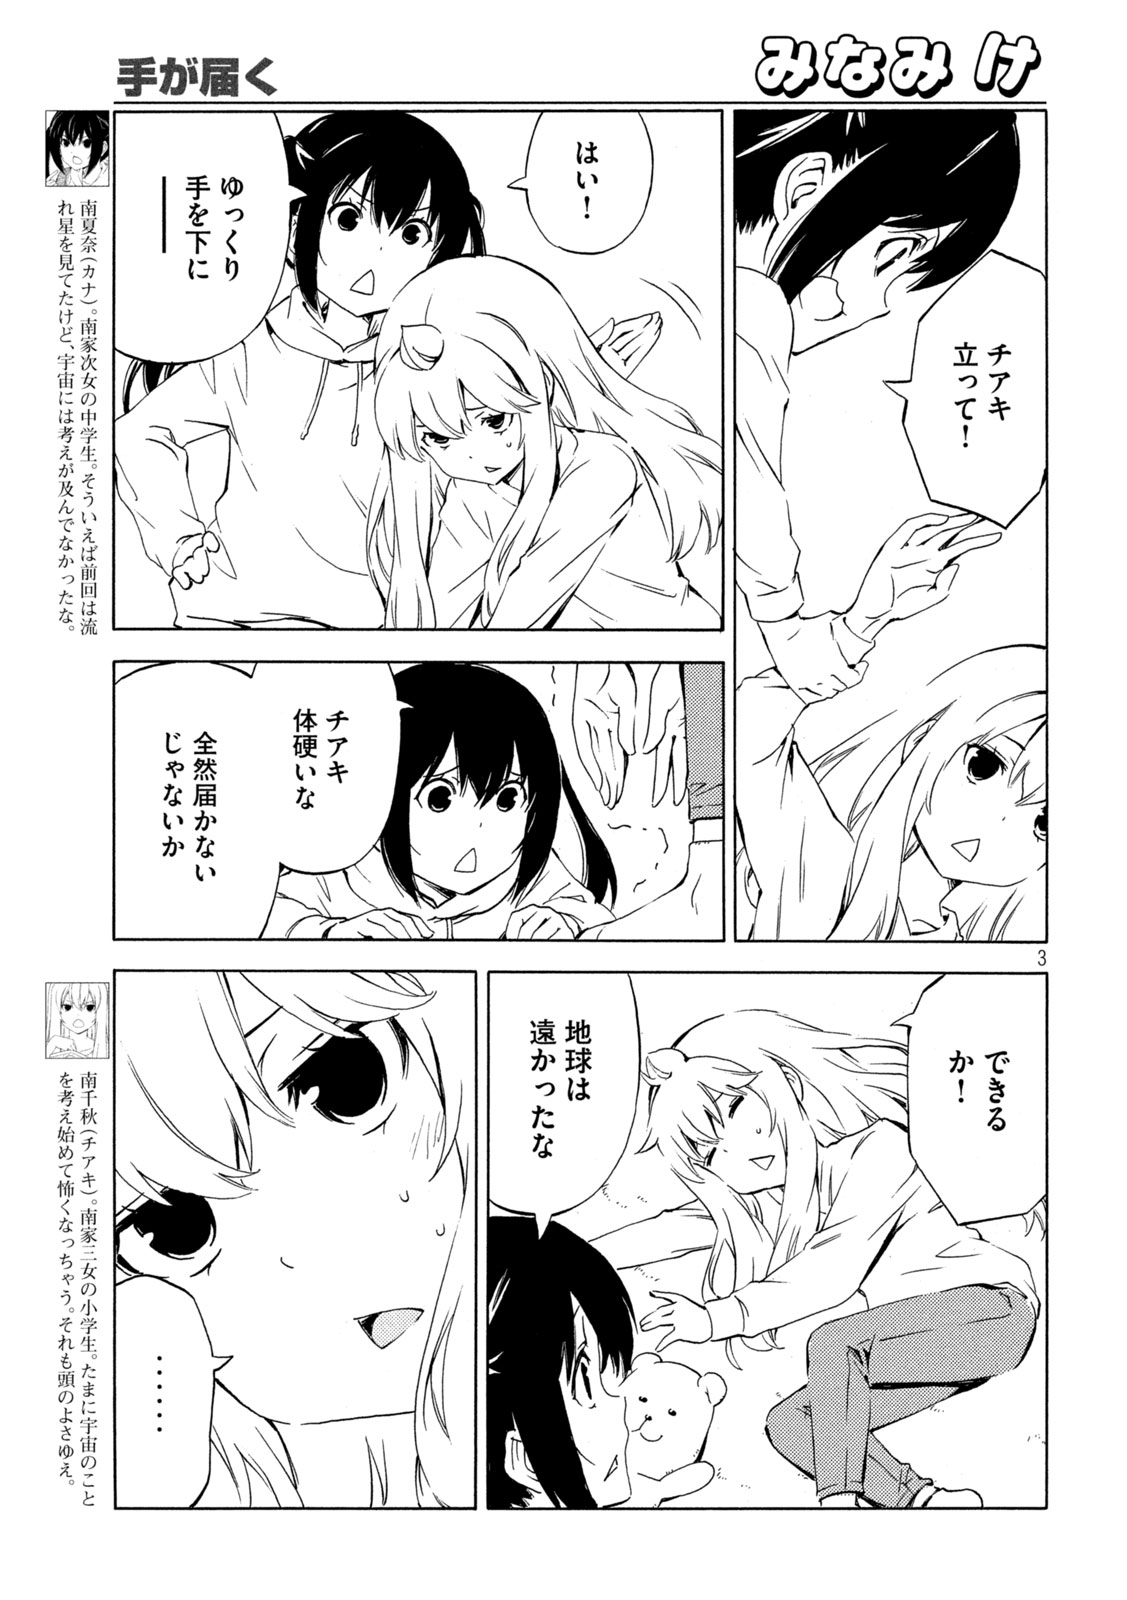 Minami-ke - Chapter 482 - Page 3